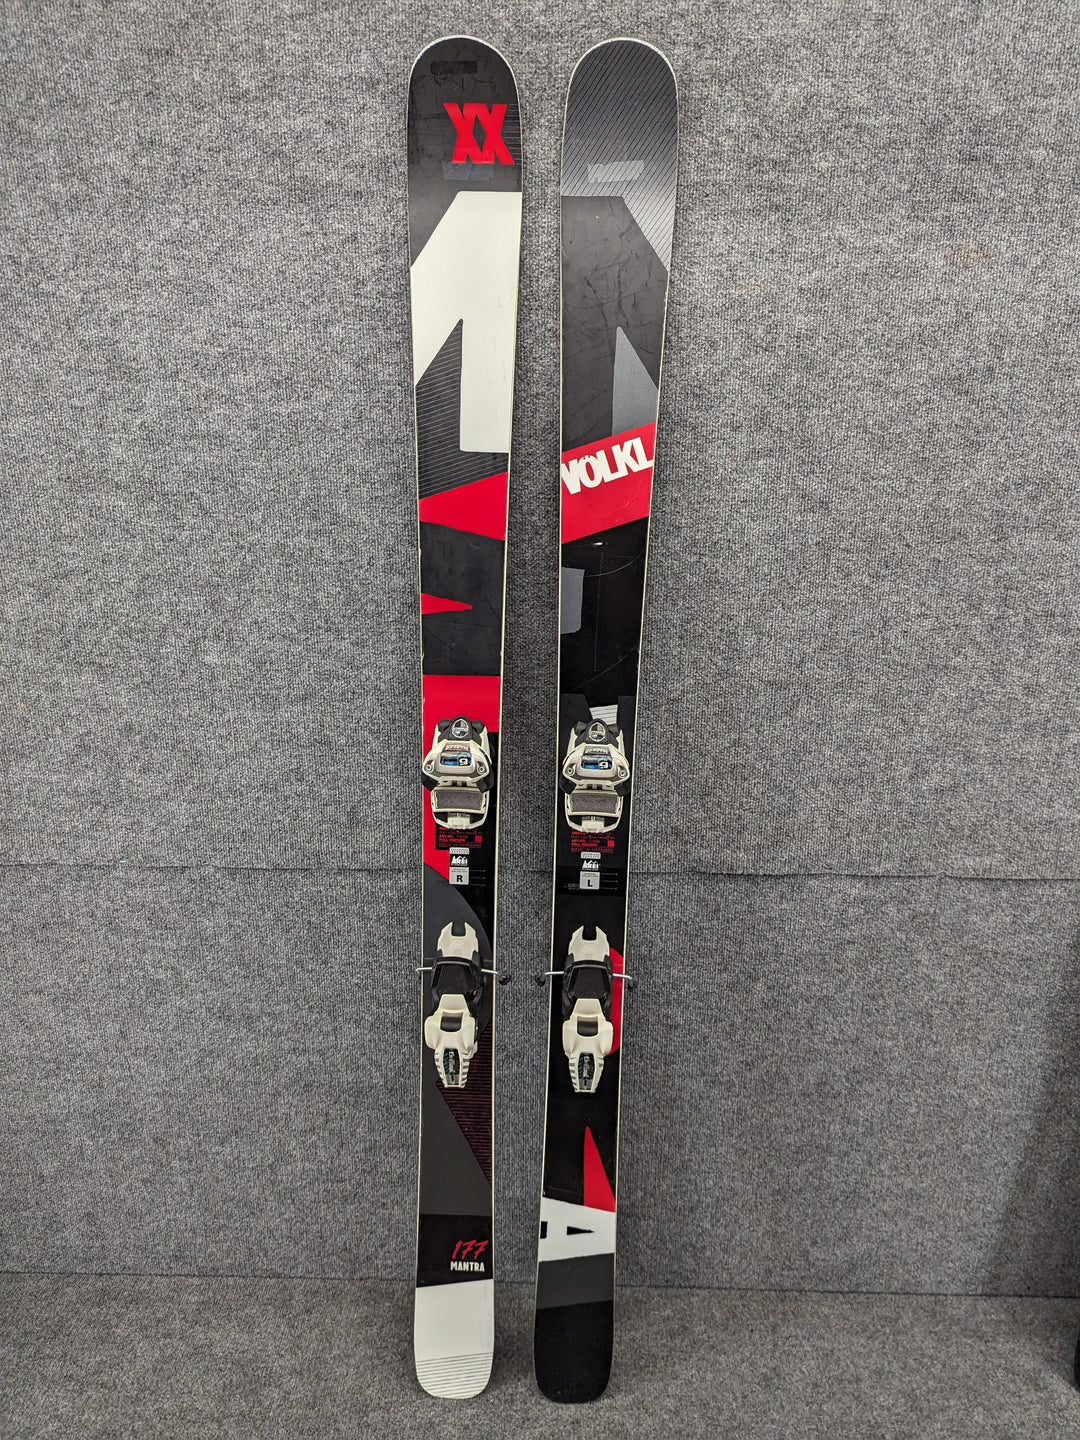 Volkl Length 177 cm/69.5" Alpine Skis